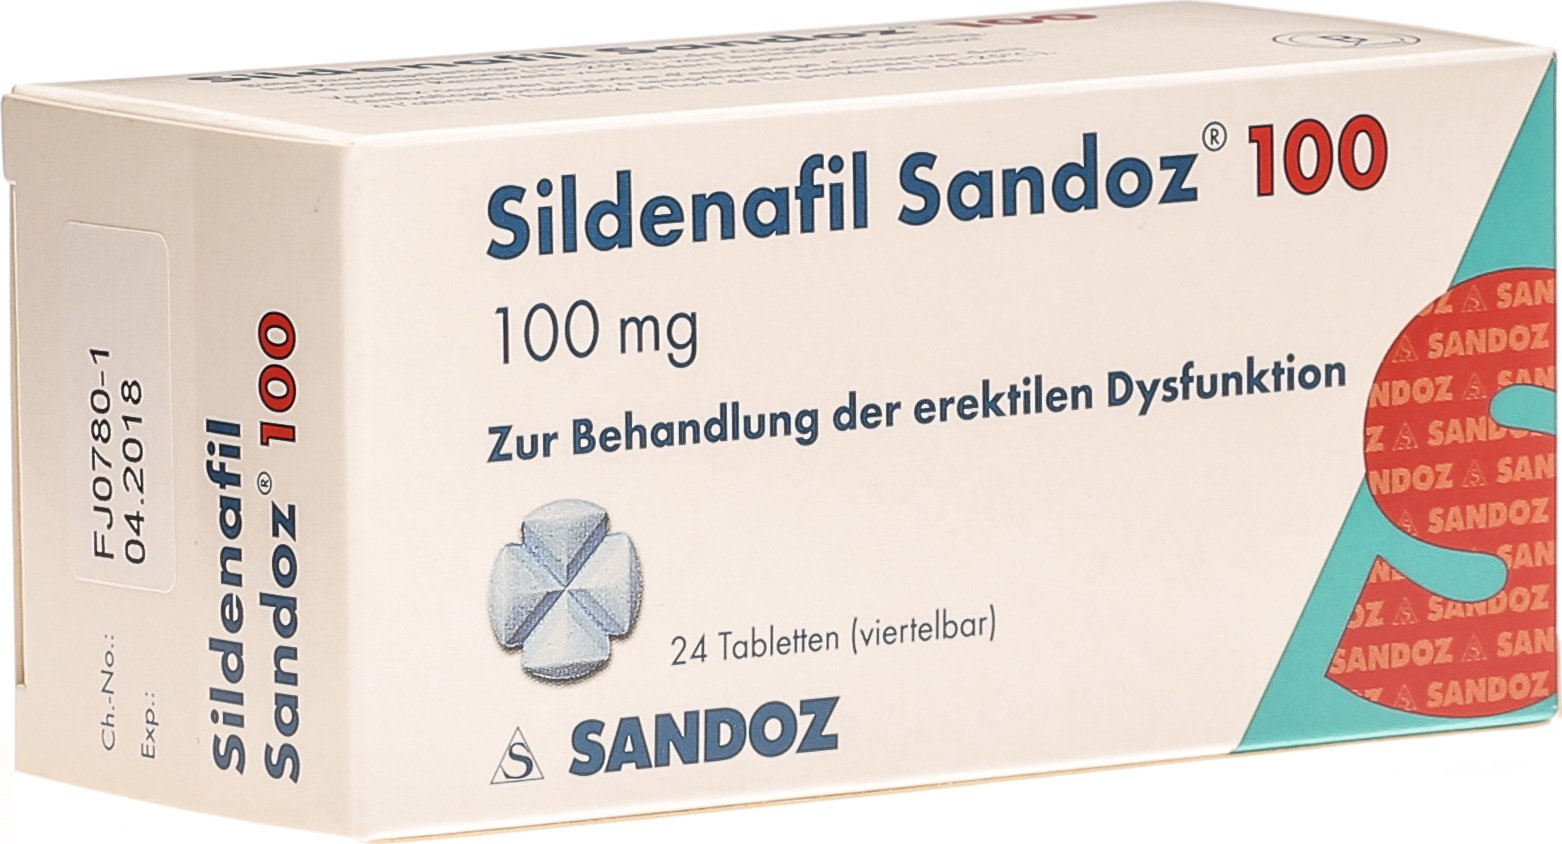 Sildenafil Sandoz Tabletten 100mg 24 Stuck In Der Adler Apotheke